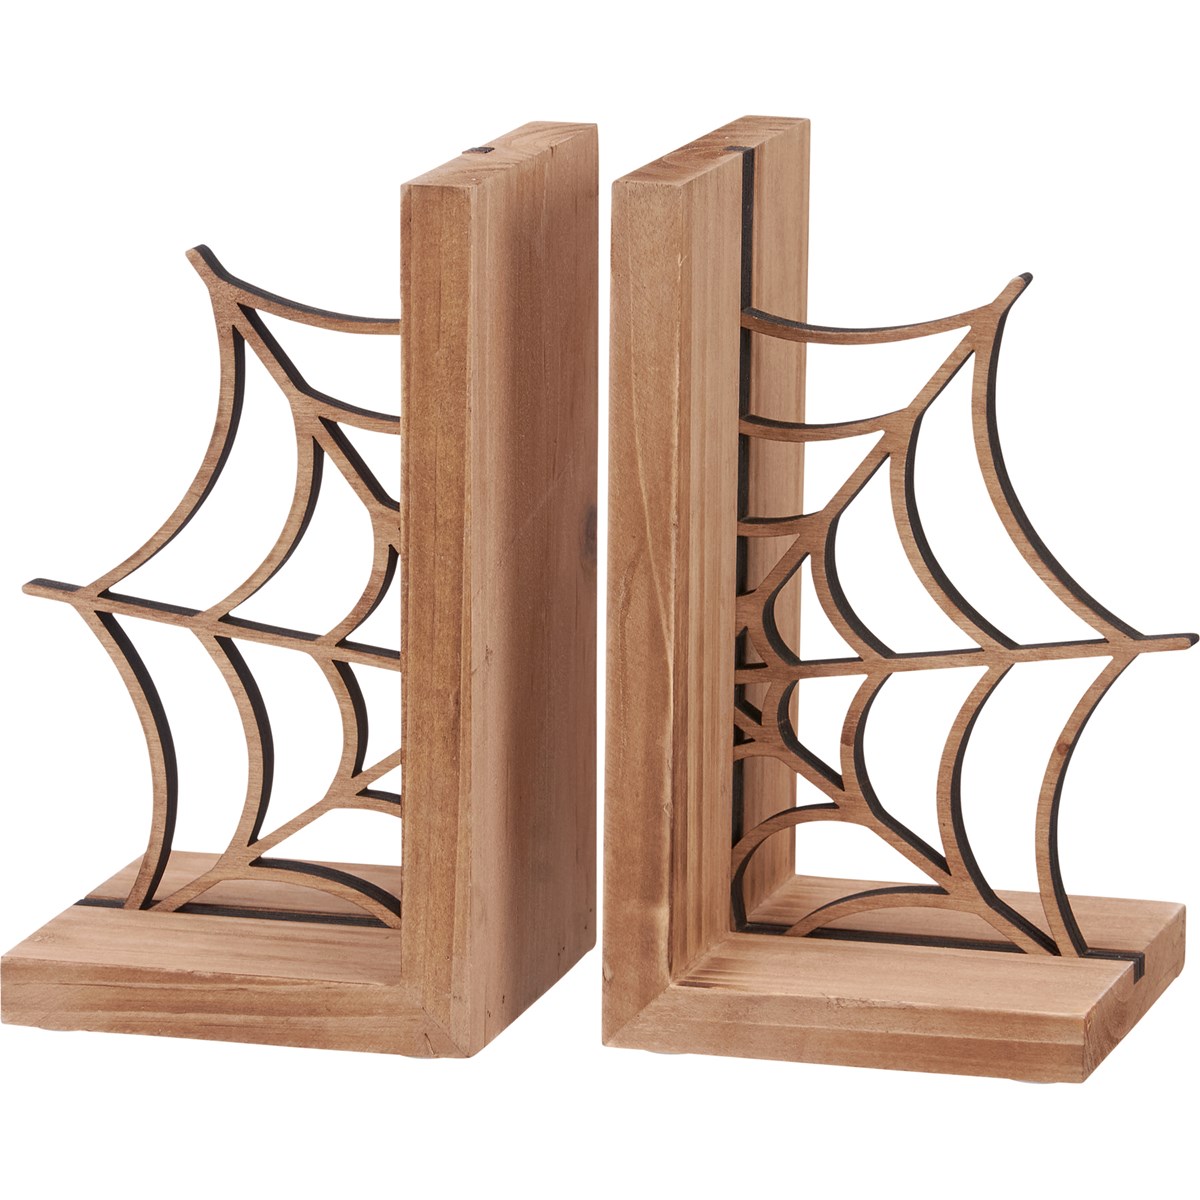 Cobweb Bookends - Wood